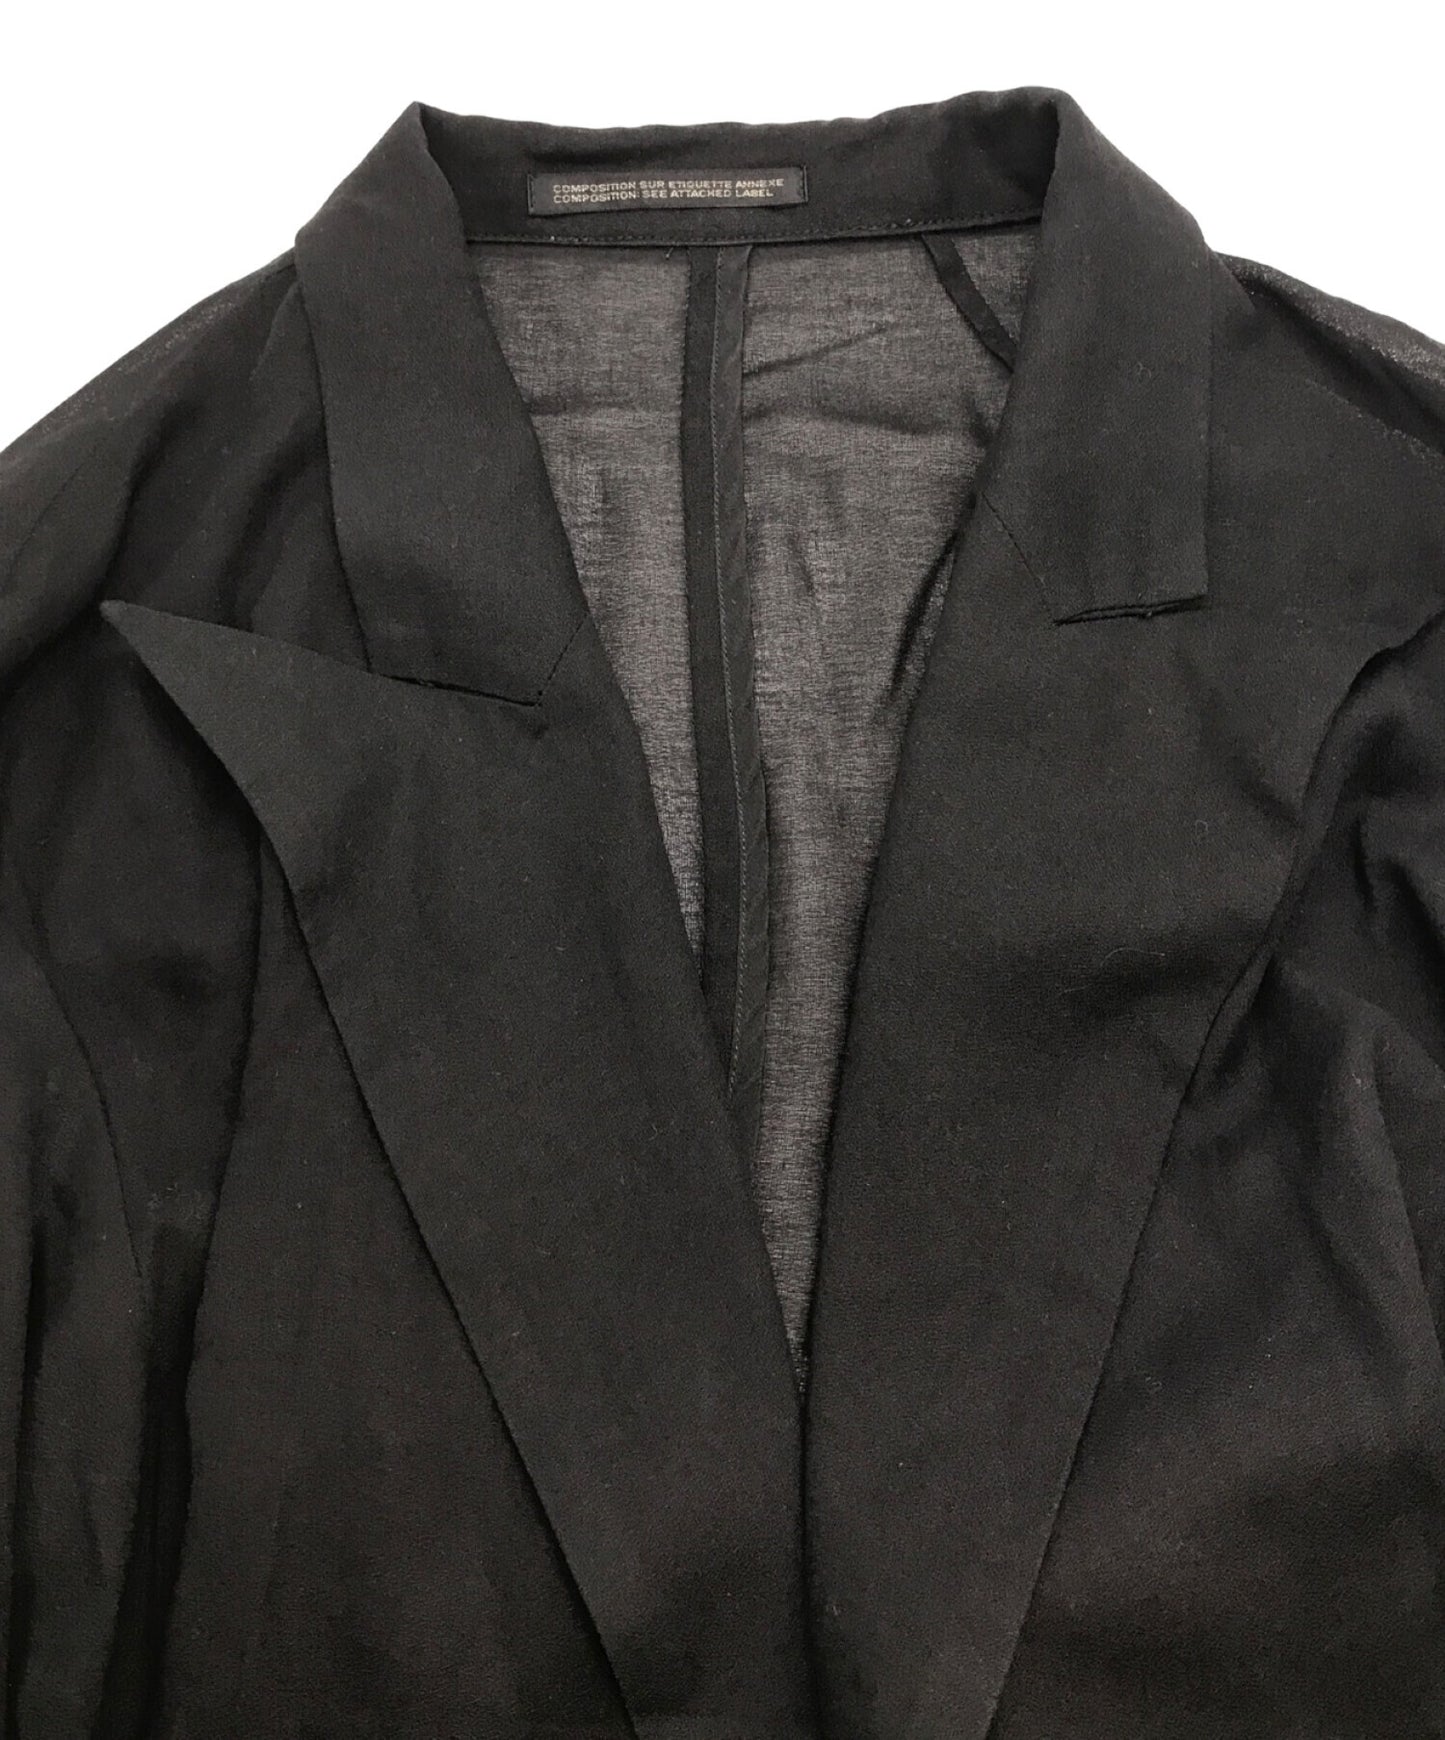 [Pre-owned] YOHJI YAMAMOTO Silk blend volume sleeve dress FG-C60-004